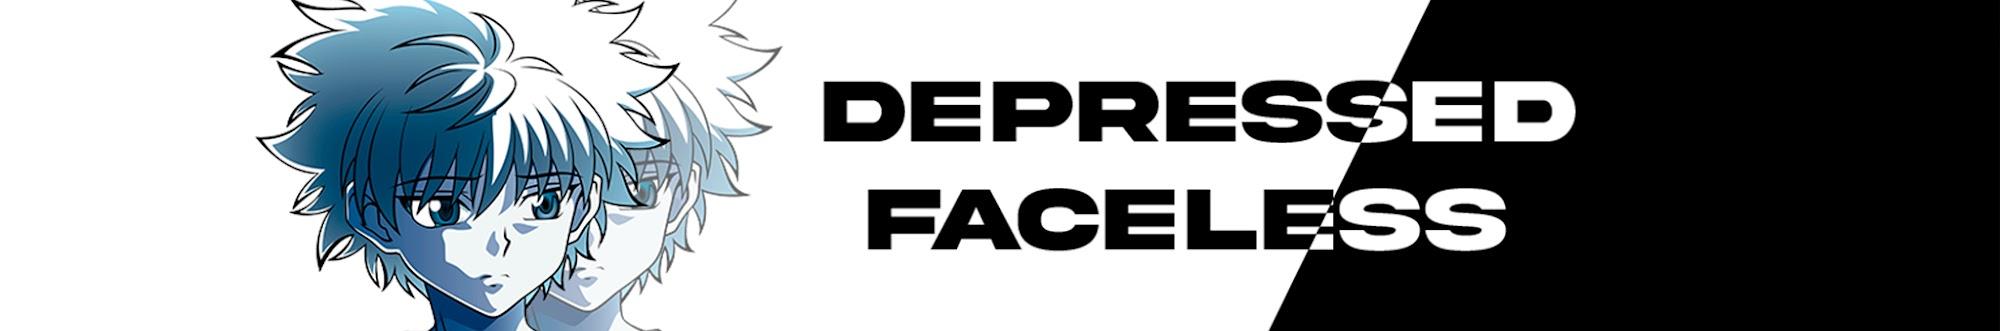 depressed faceless